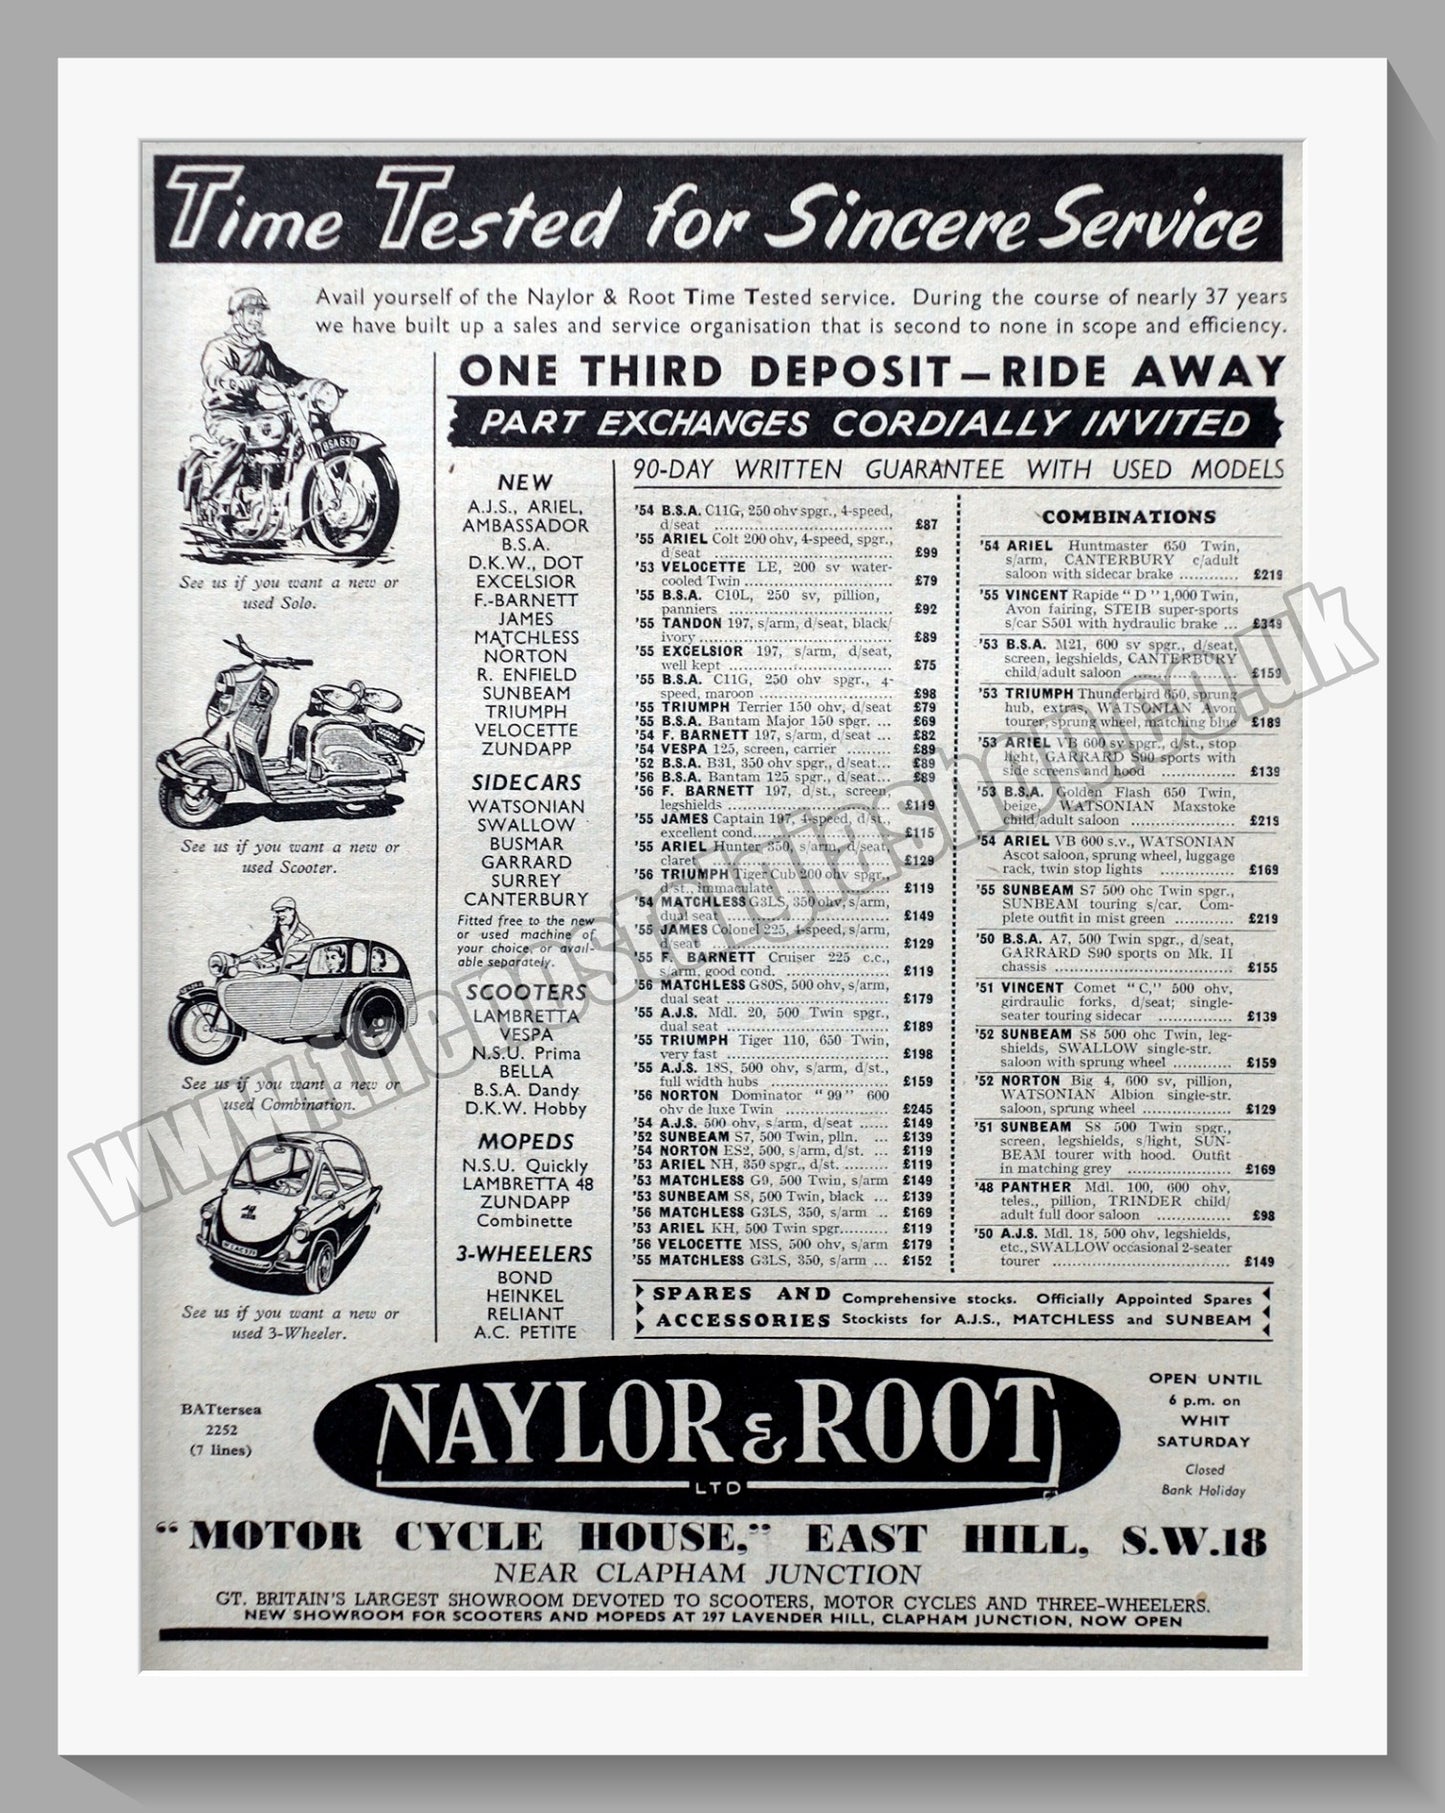 Naylor & Root Ltd Motorcycle Dealer. Original Advert 1957 (ref AD57530)